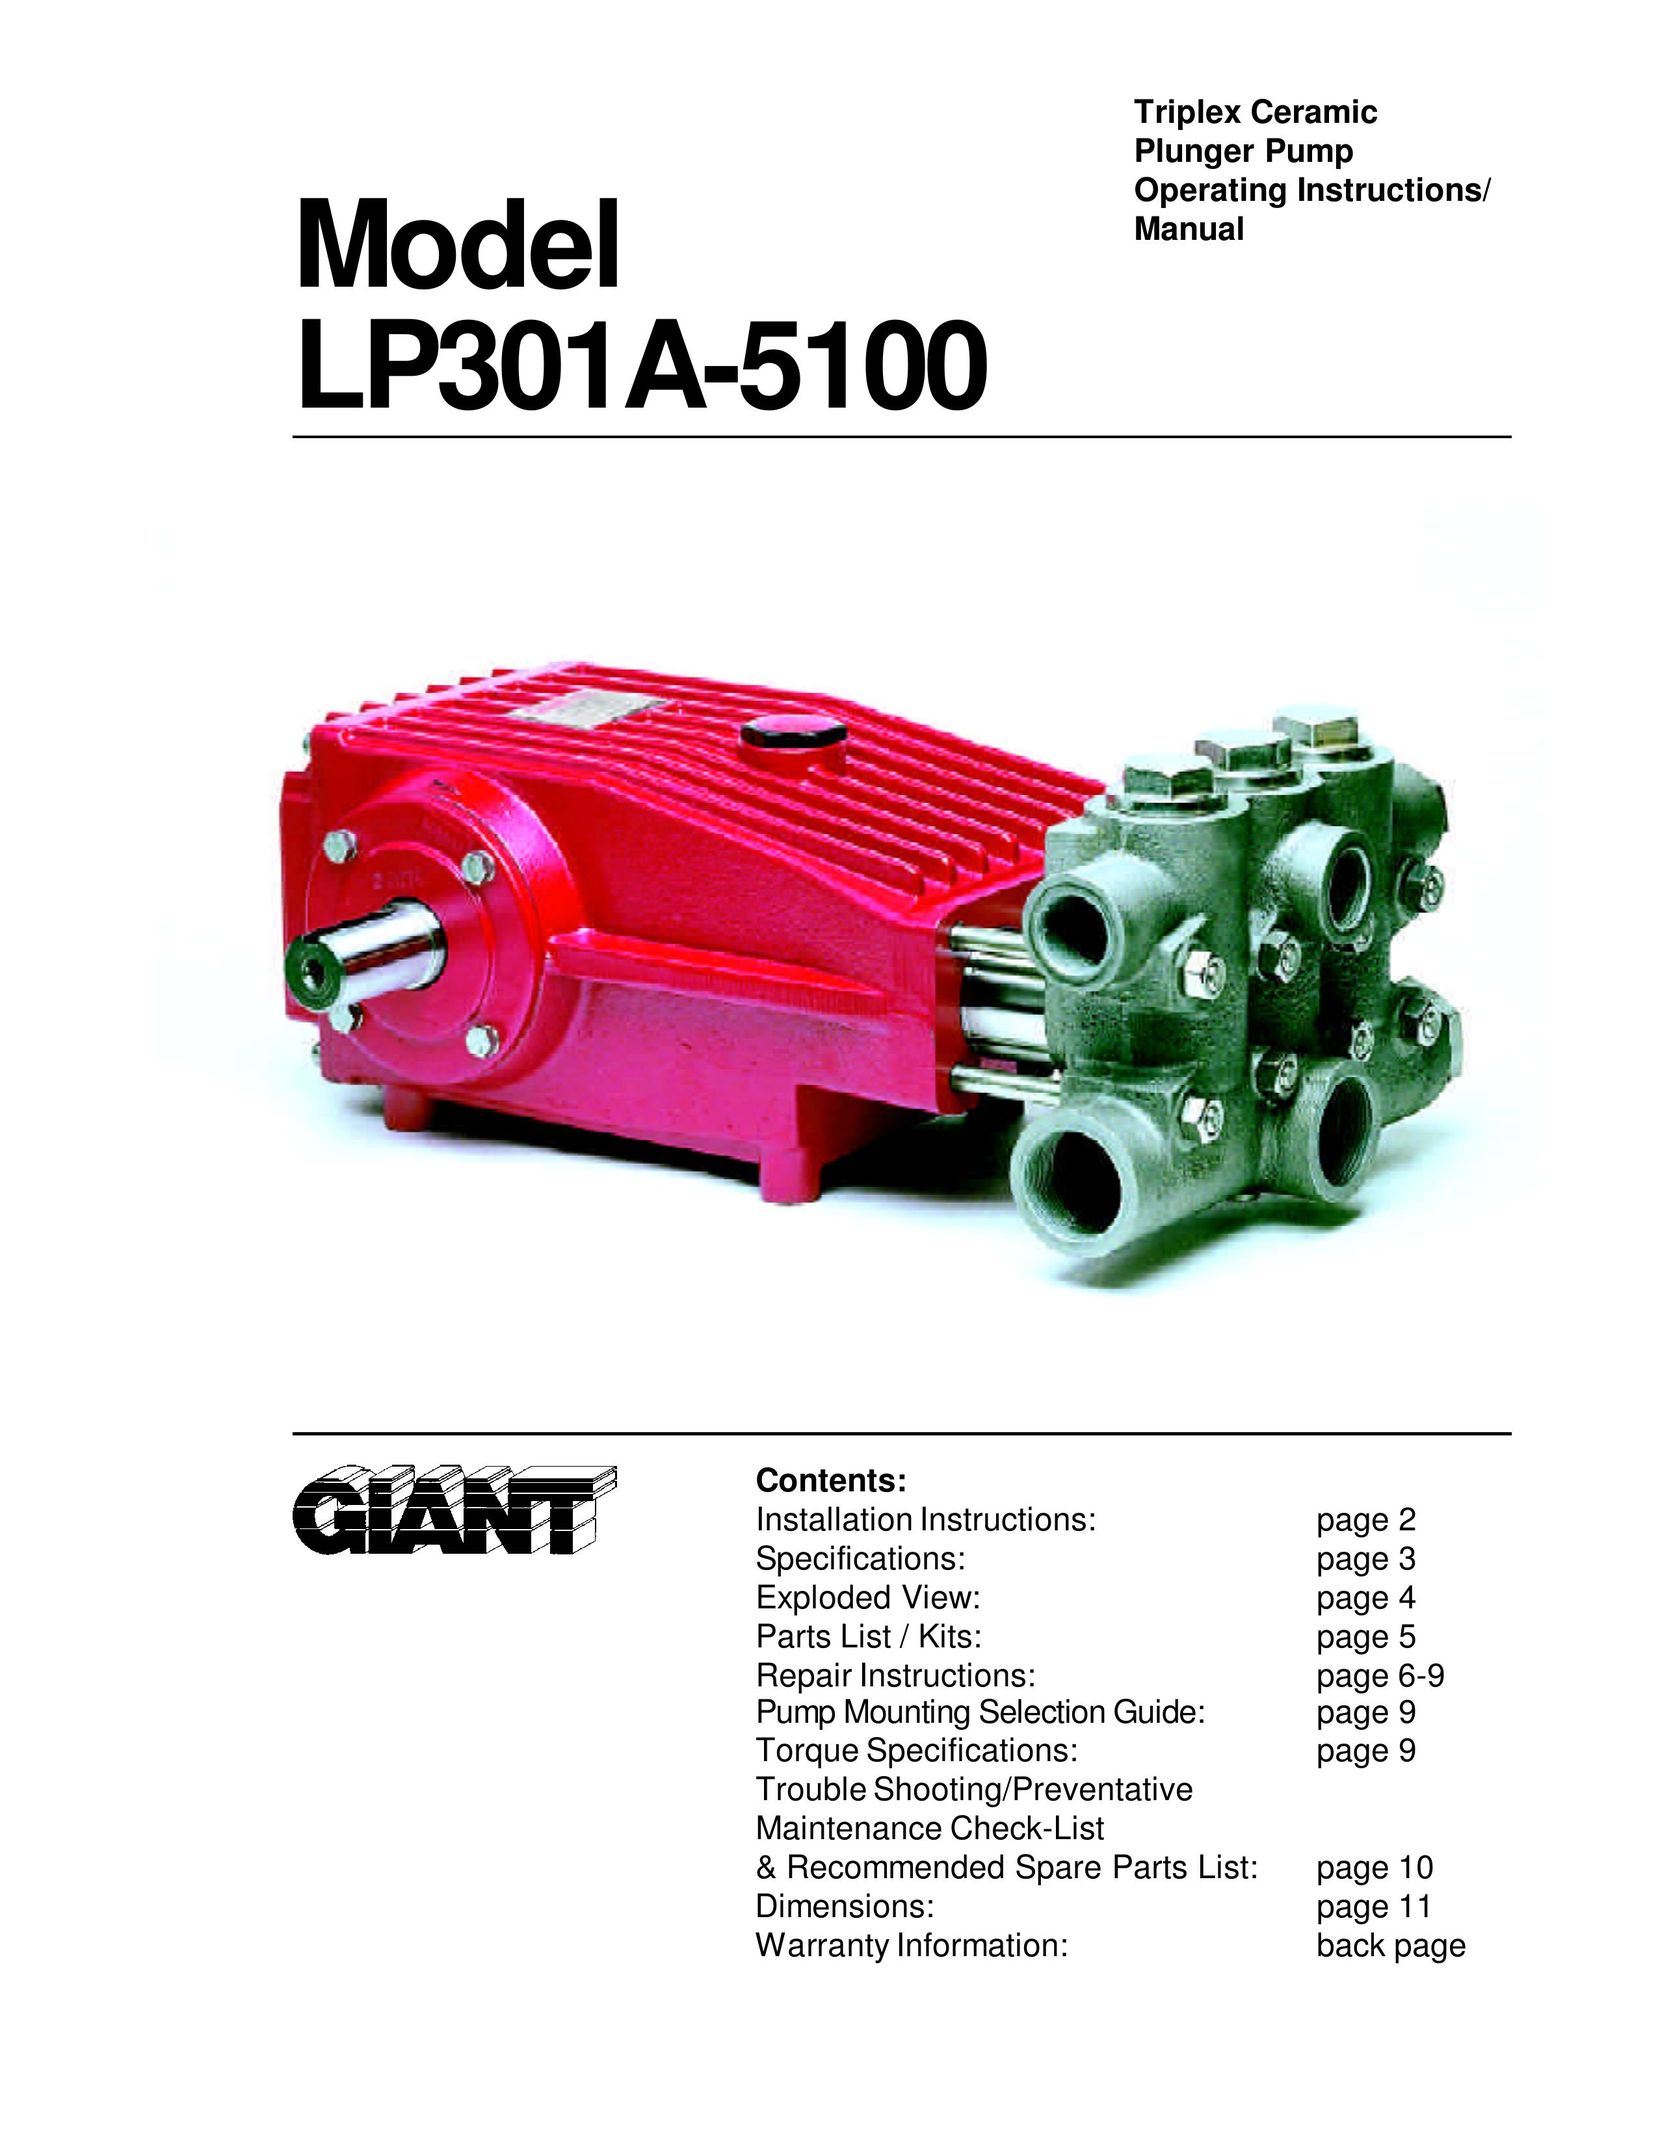 Giant LP301A-5100 Water Pump User Manual